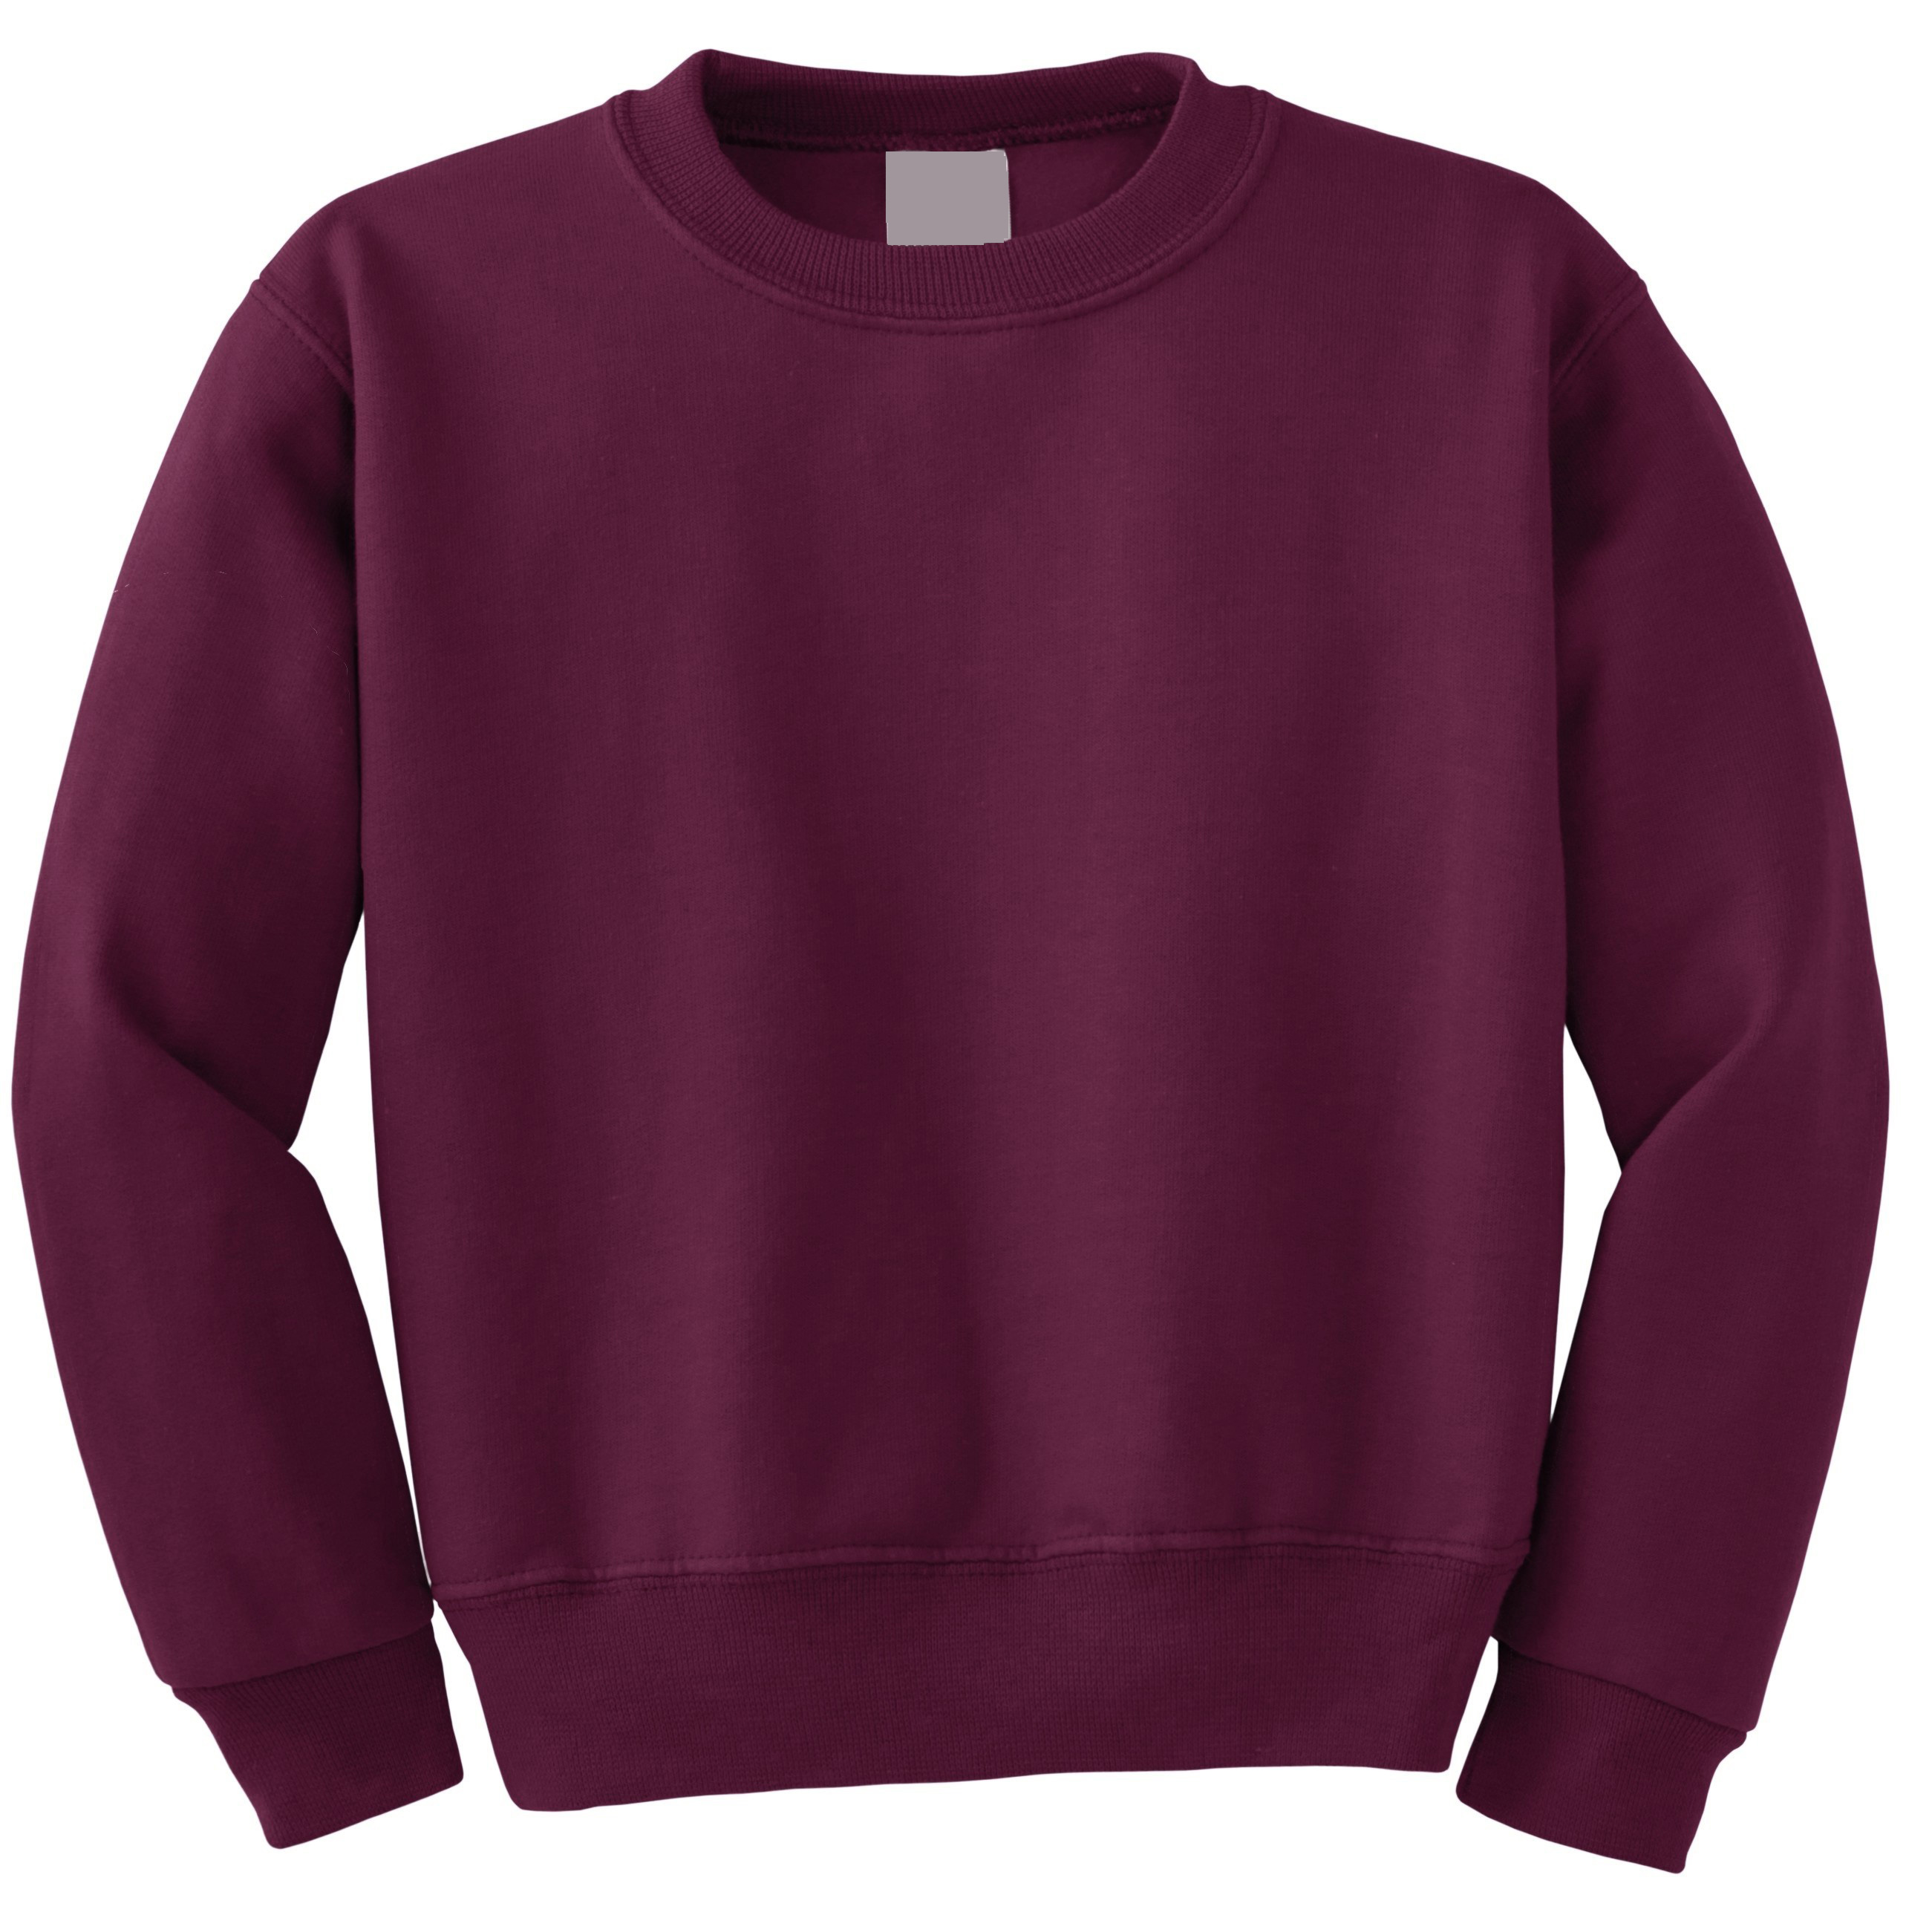 Blank Burgundy Sweatshirt